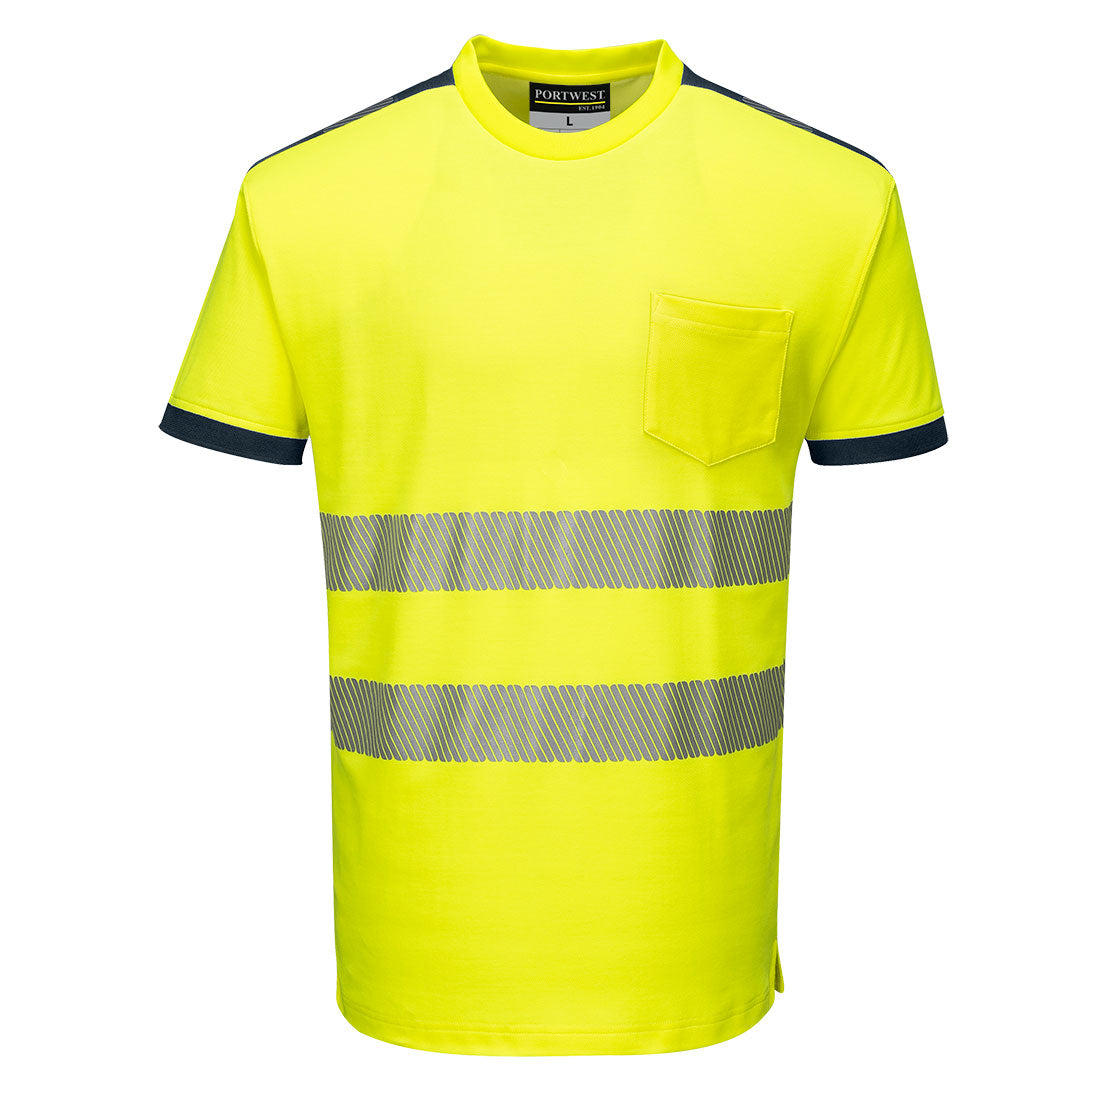 Portwest T181 - Yellow/Navy Sz M PW3 Hi-Vis Short Sleeved T-Shirt Viz Visibilty